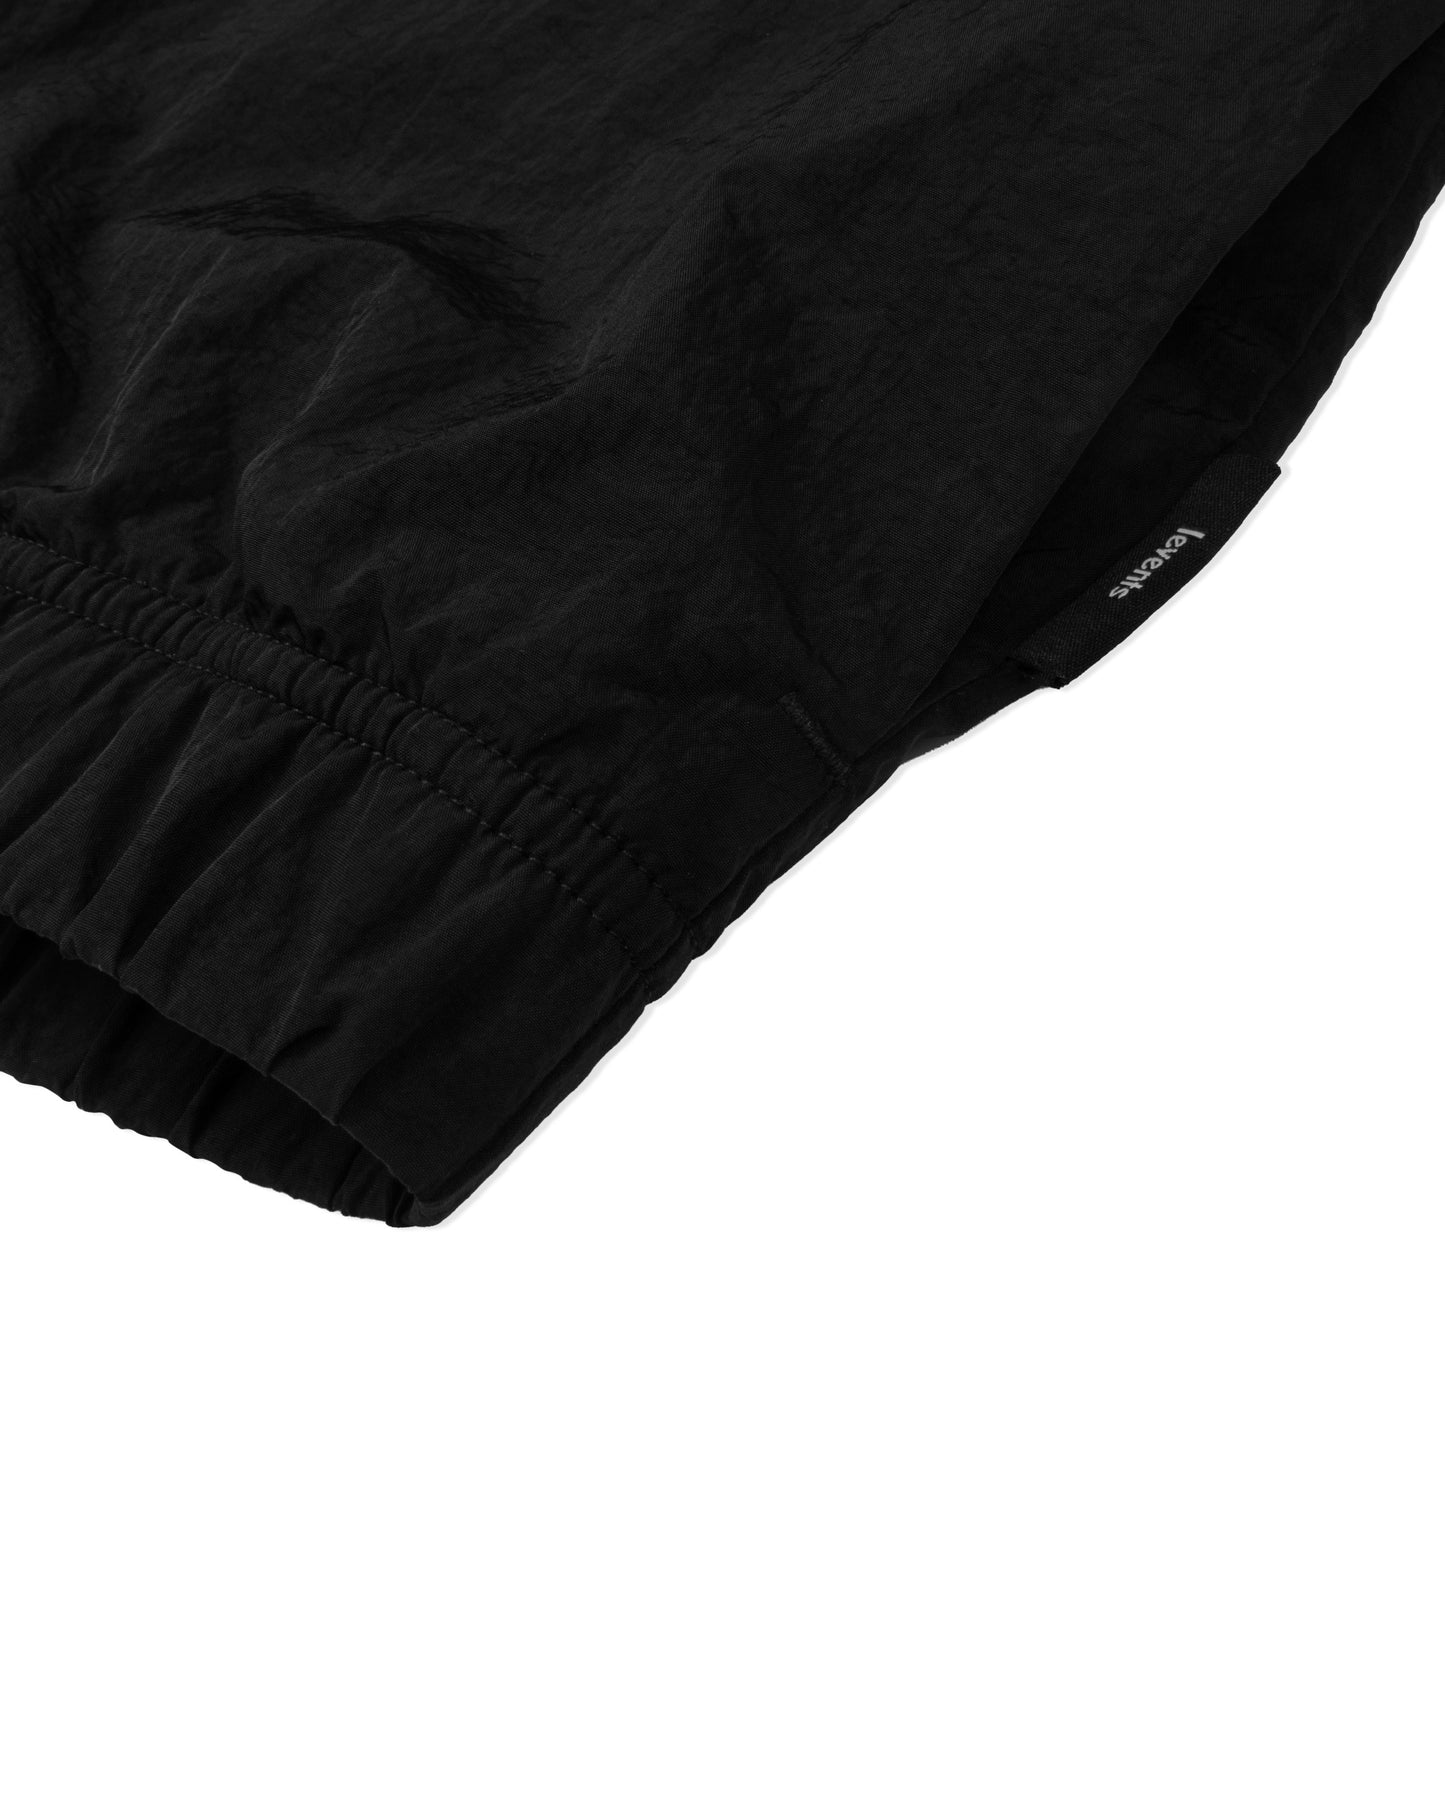 Levents® Sporty Jacket/ Black